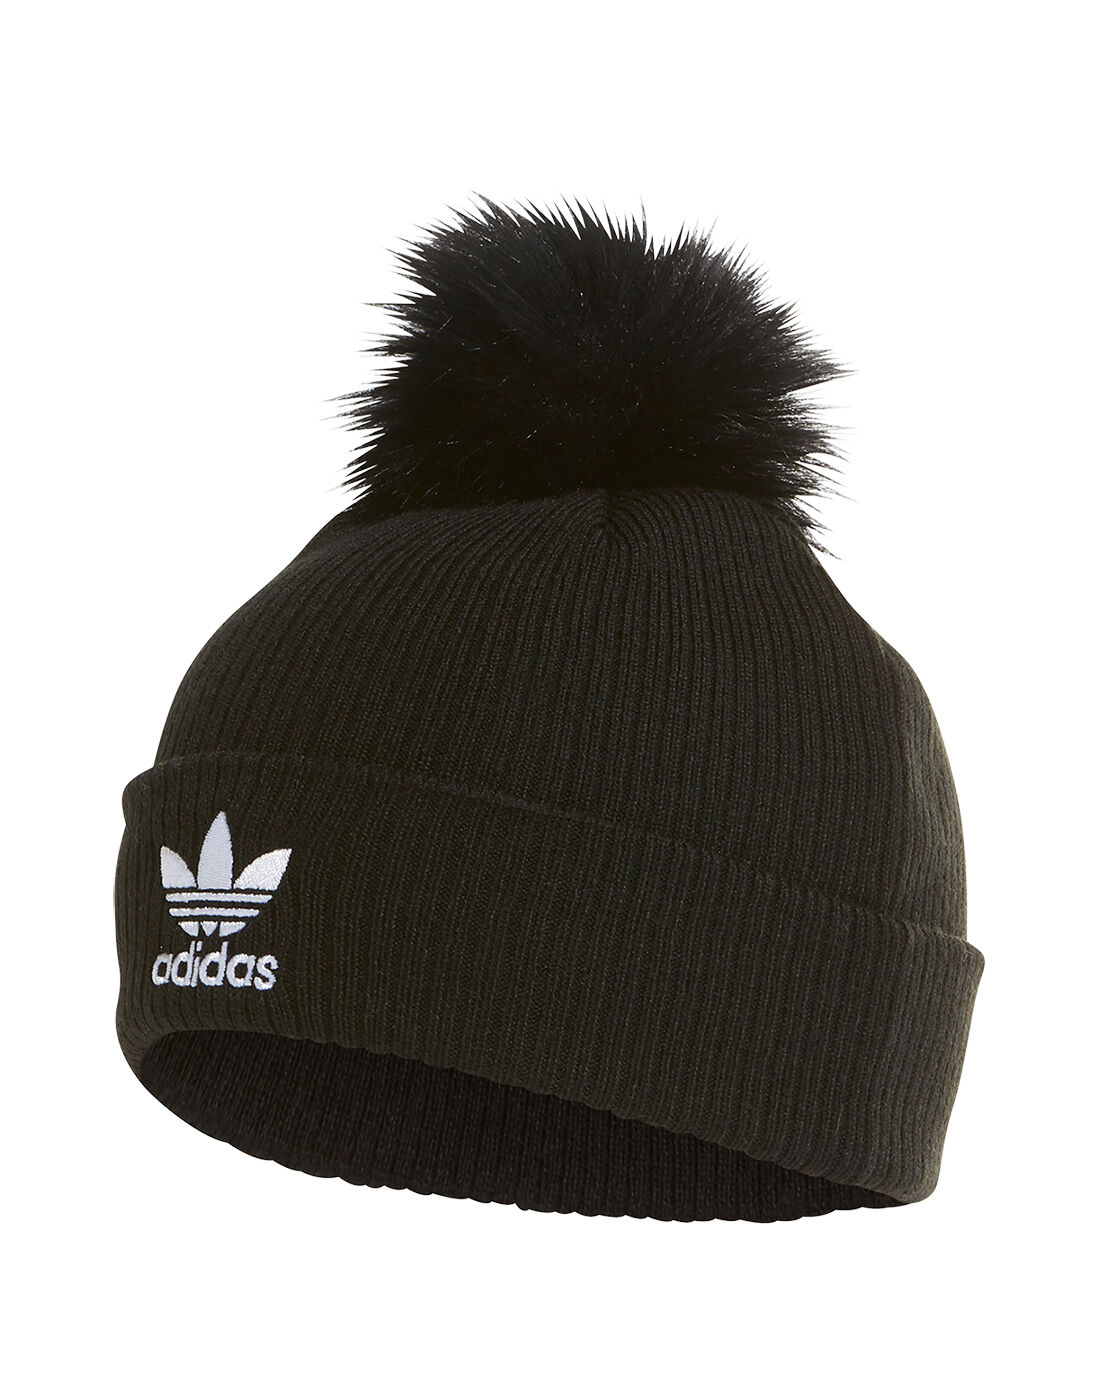 Adidas Originals Trefoil Fur Bobble Hat 